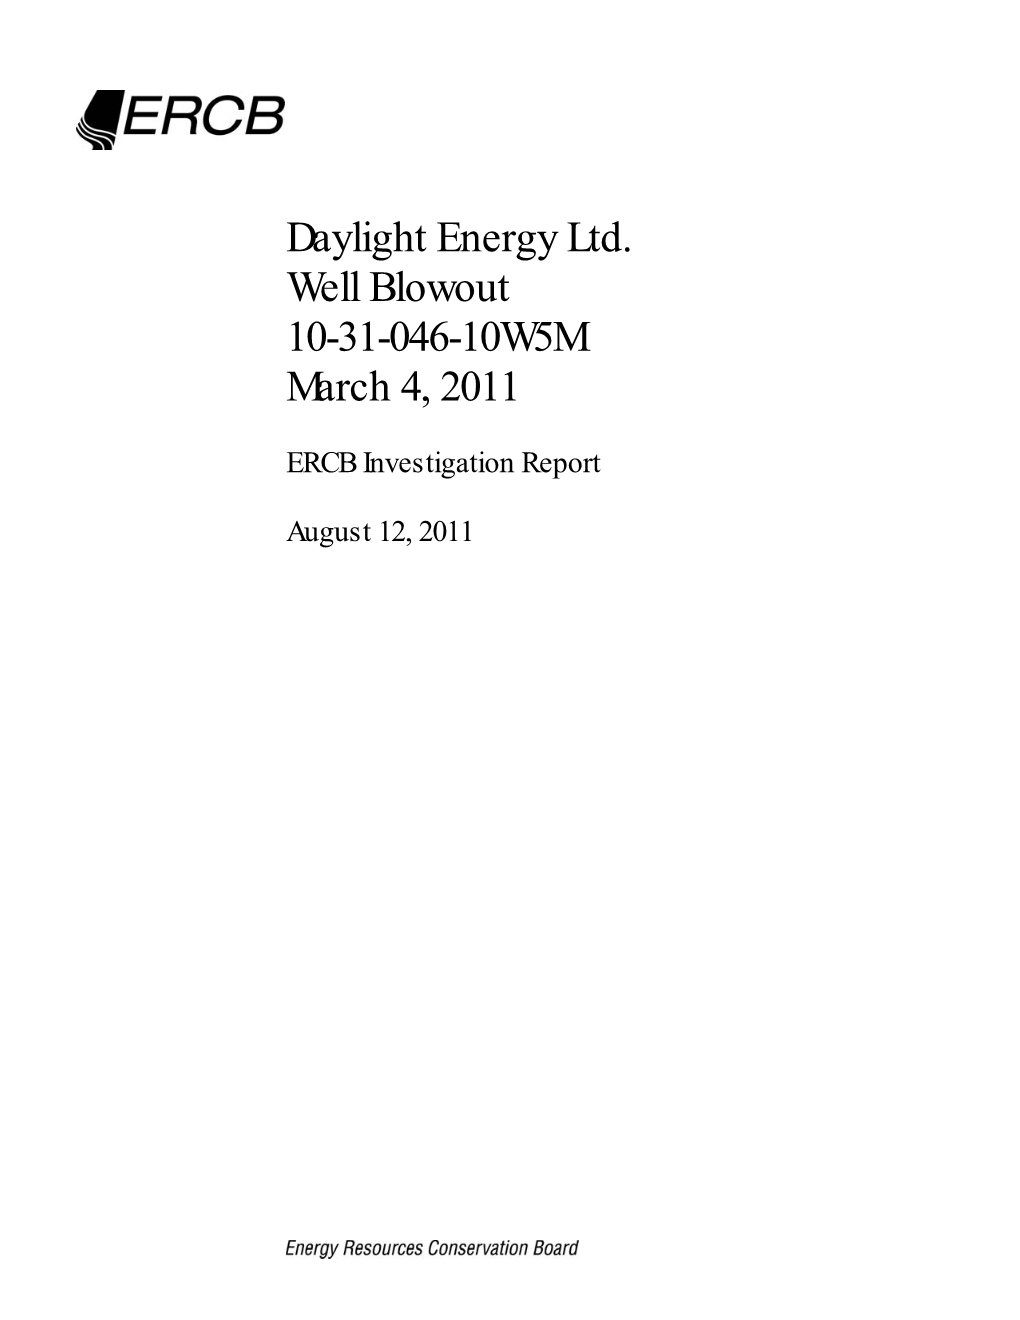 Daylight Energy Ltd. Well Blowout 10-31-046-10W5M March 4, 2011